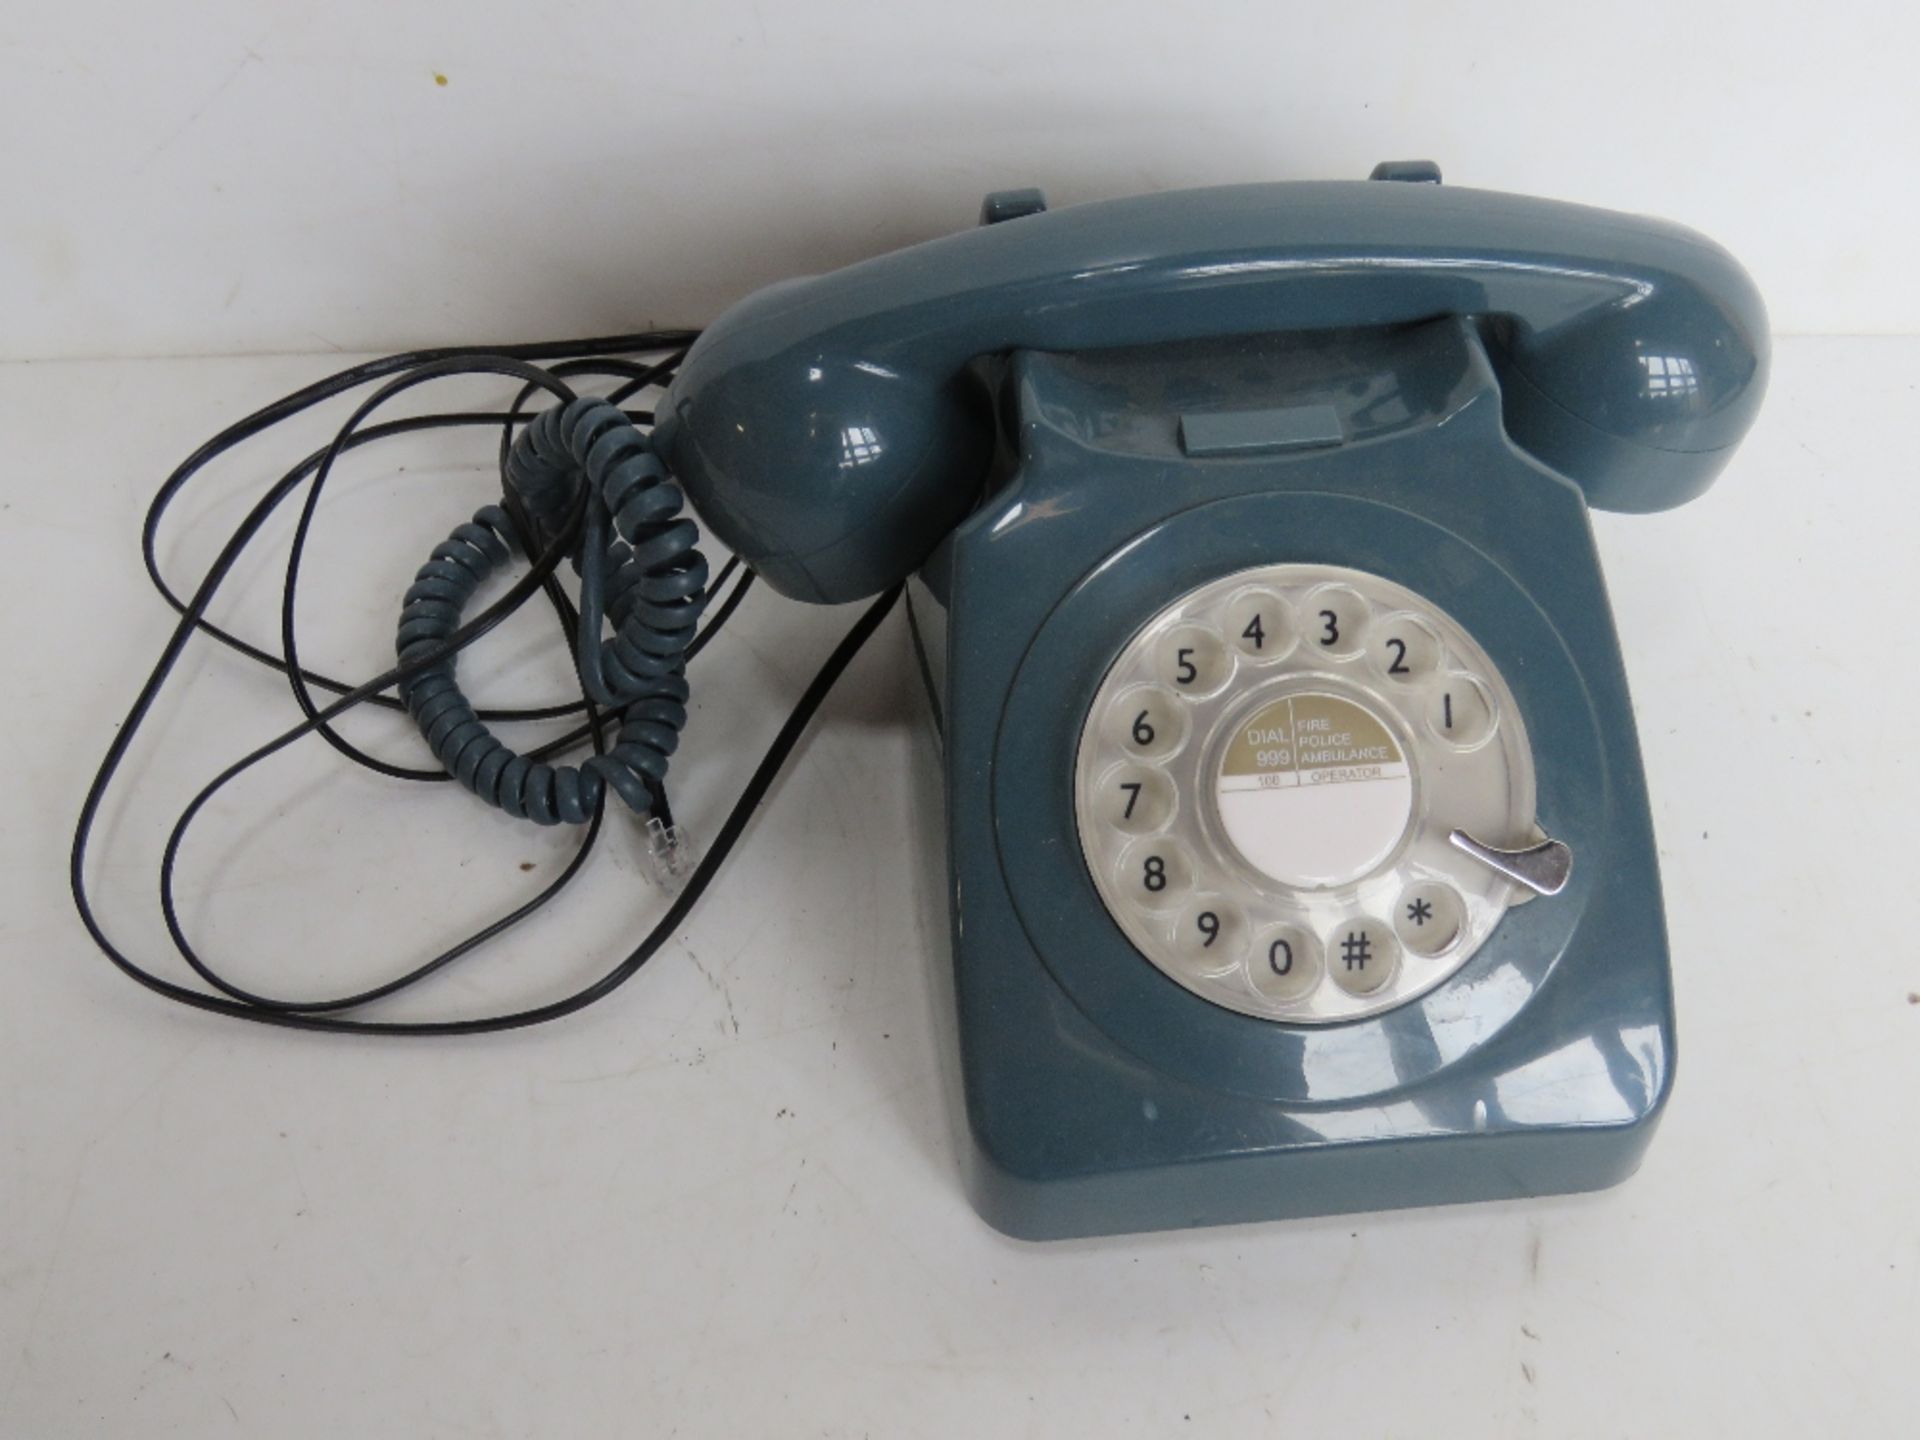 A contemporary Rotary telephone.